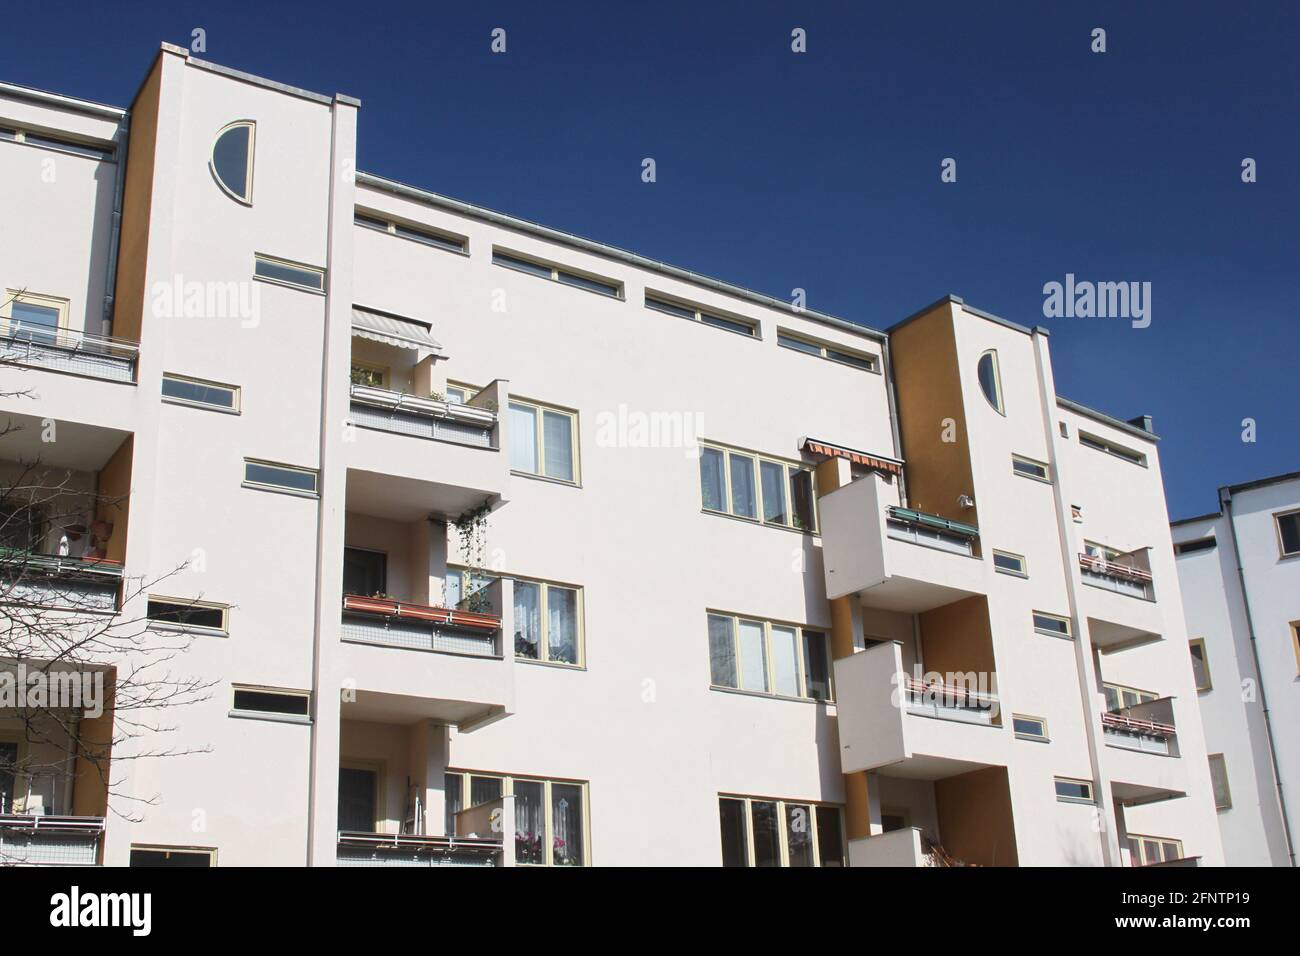 Housing designed by Bauhaus architect Hans Scharoun on the Siemensstadt estate in the western suburbs of Berlin Stock Photo